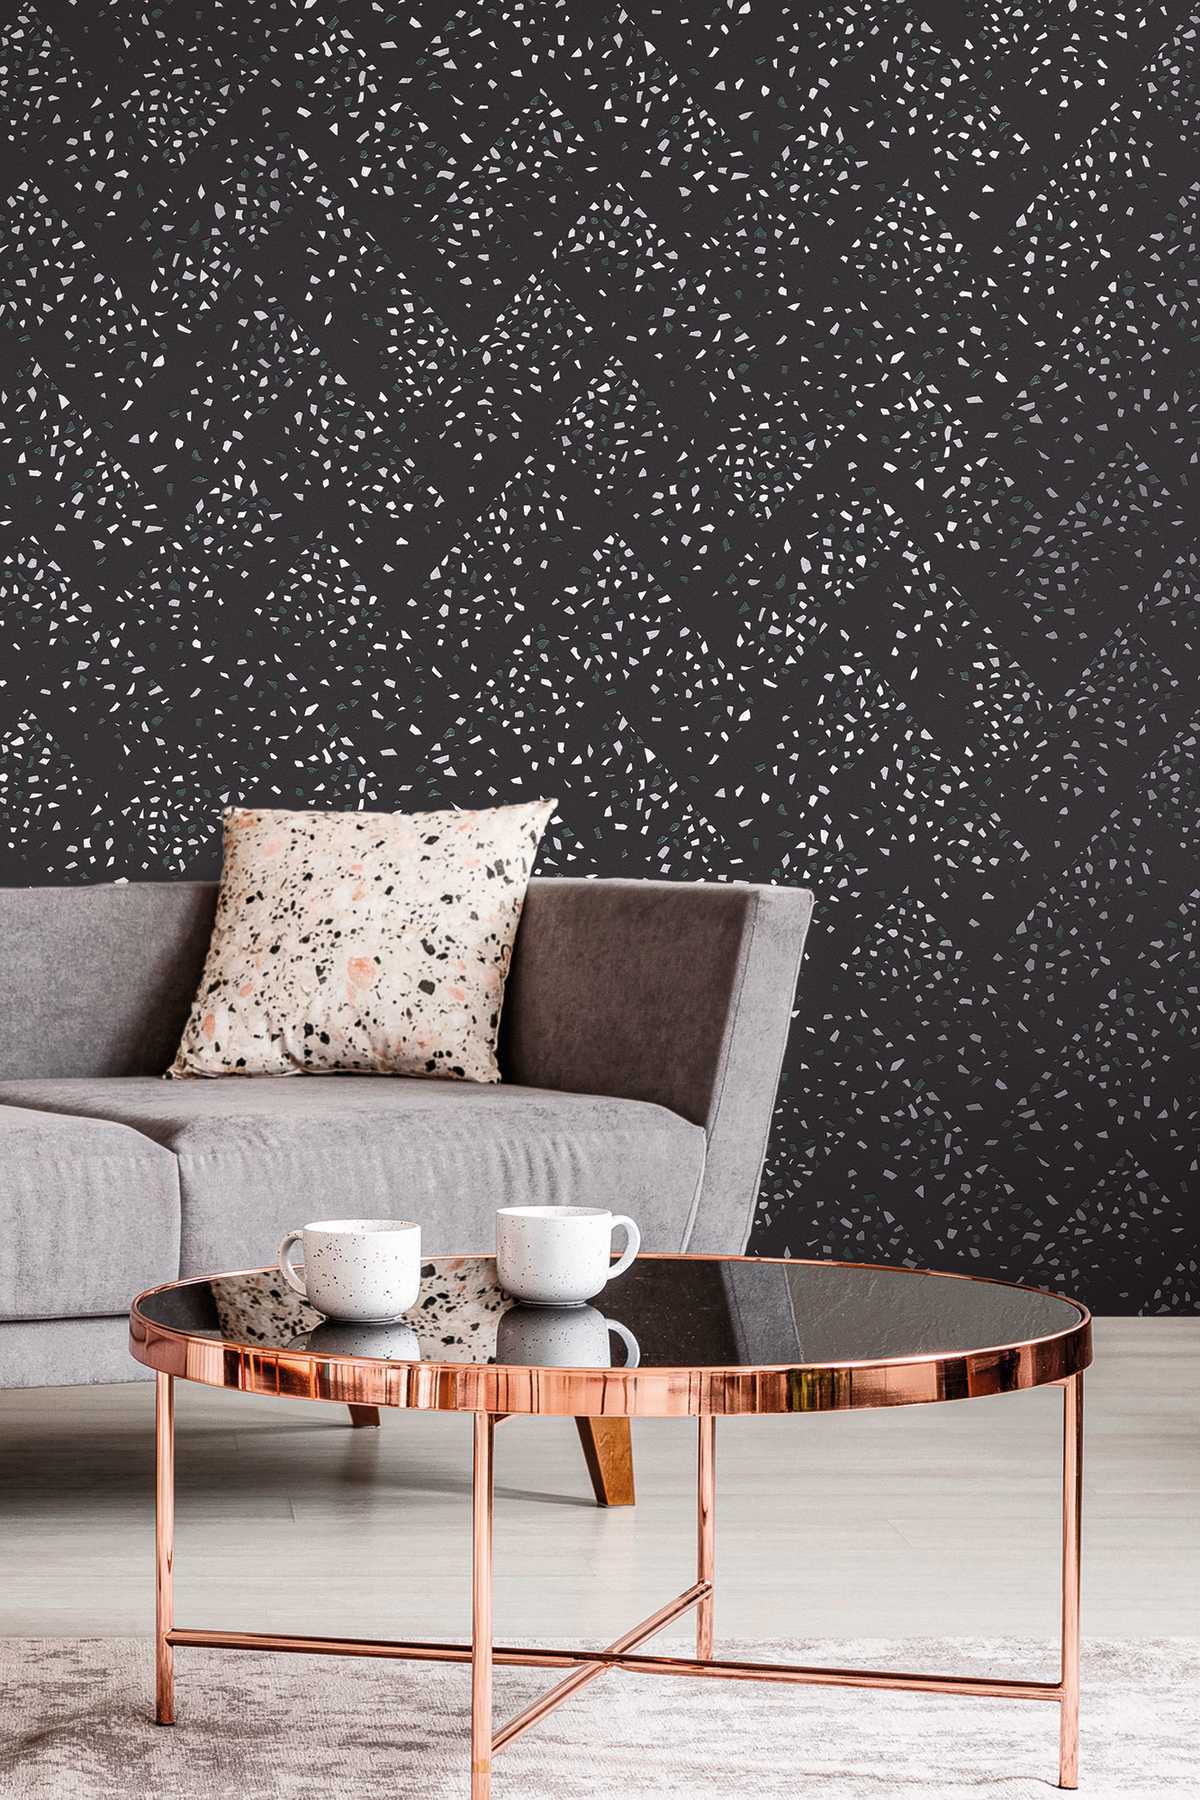             Non-woven wallpaper terrazzo with metallic effect - black, gold, grey
        